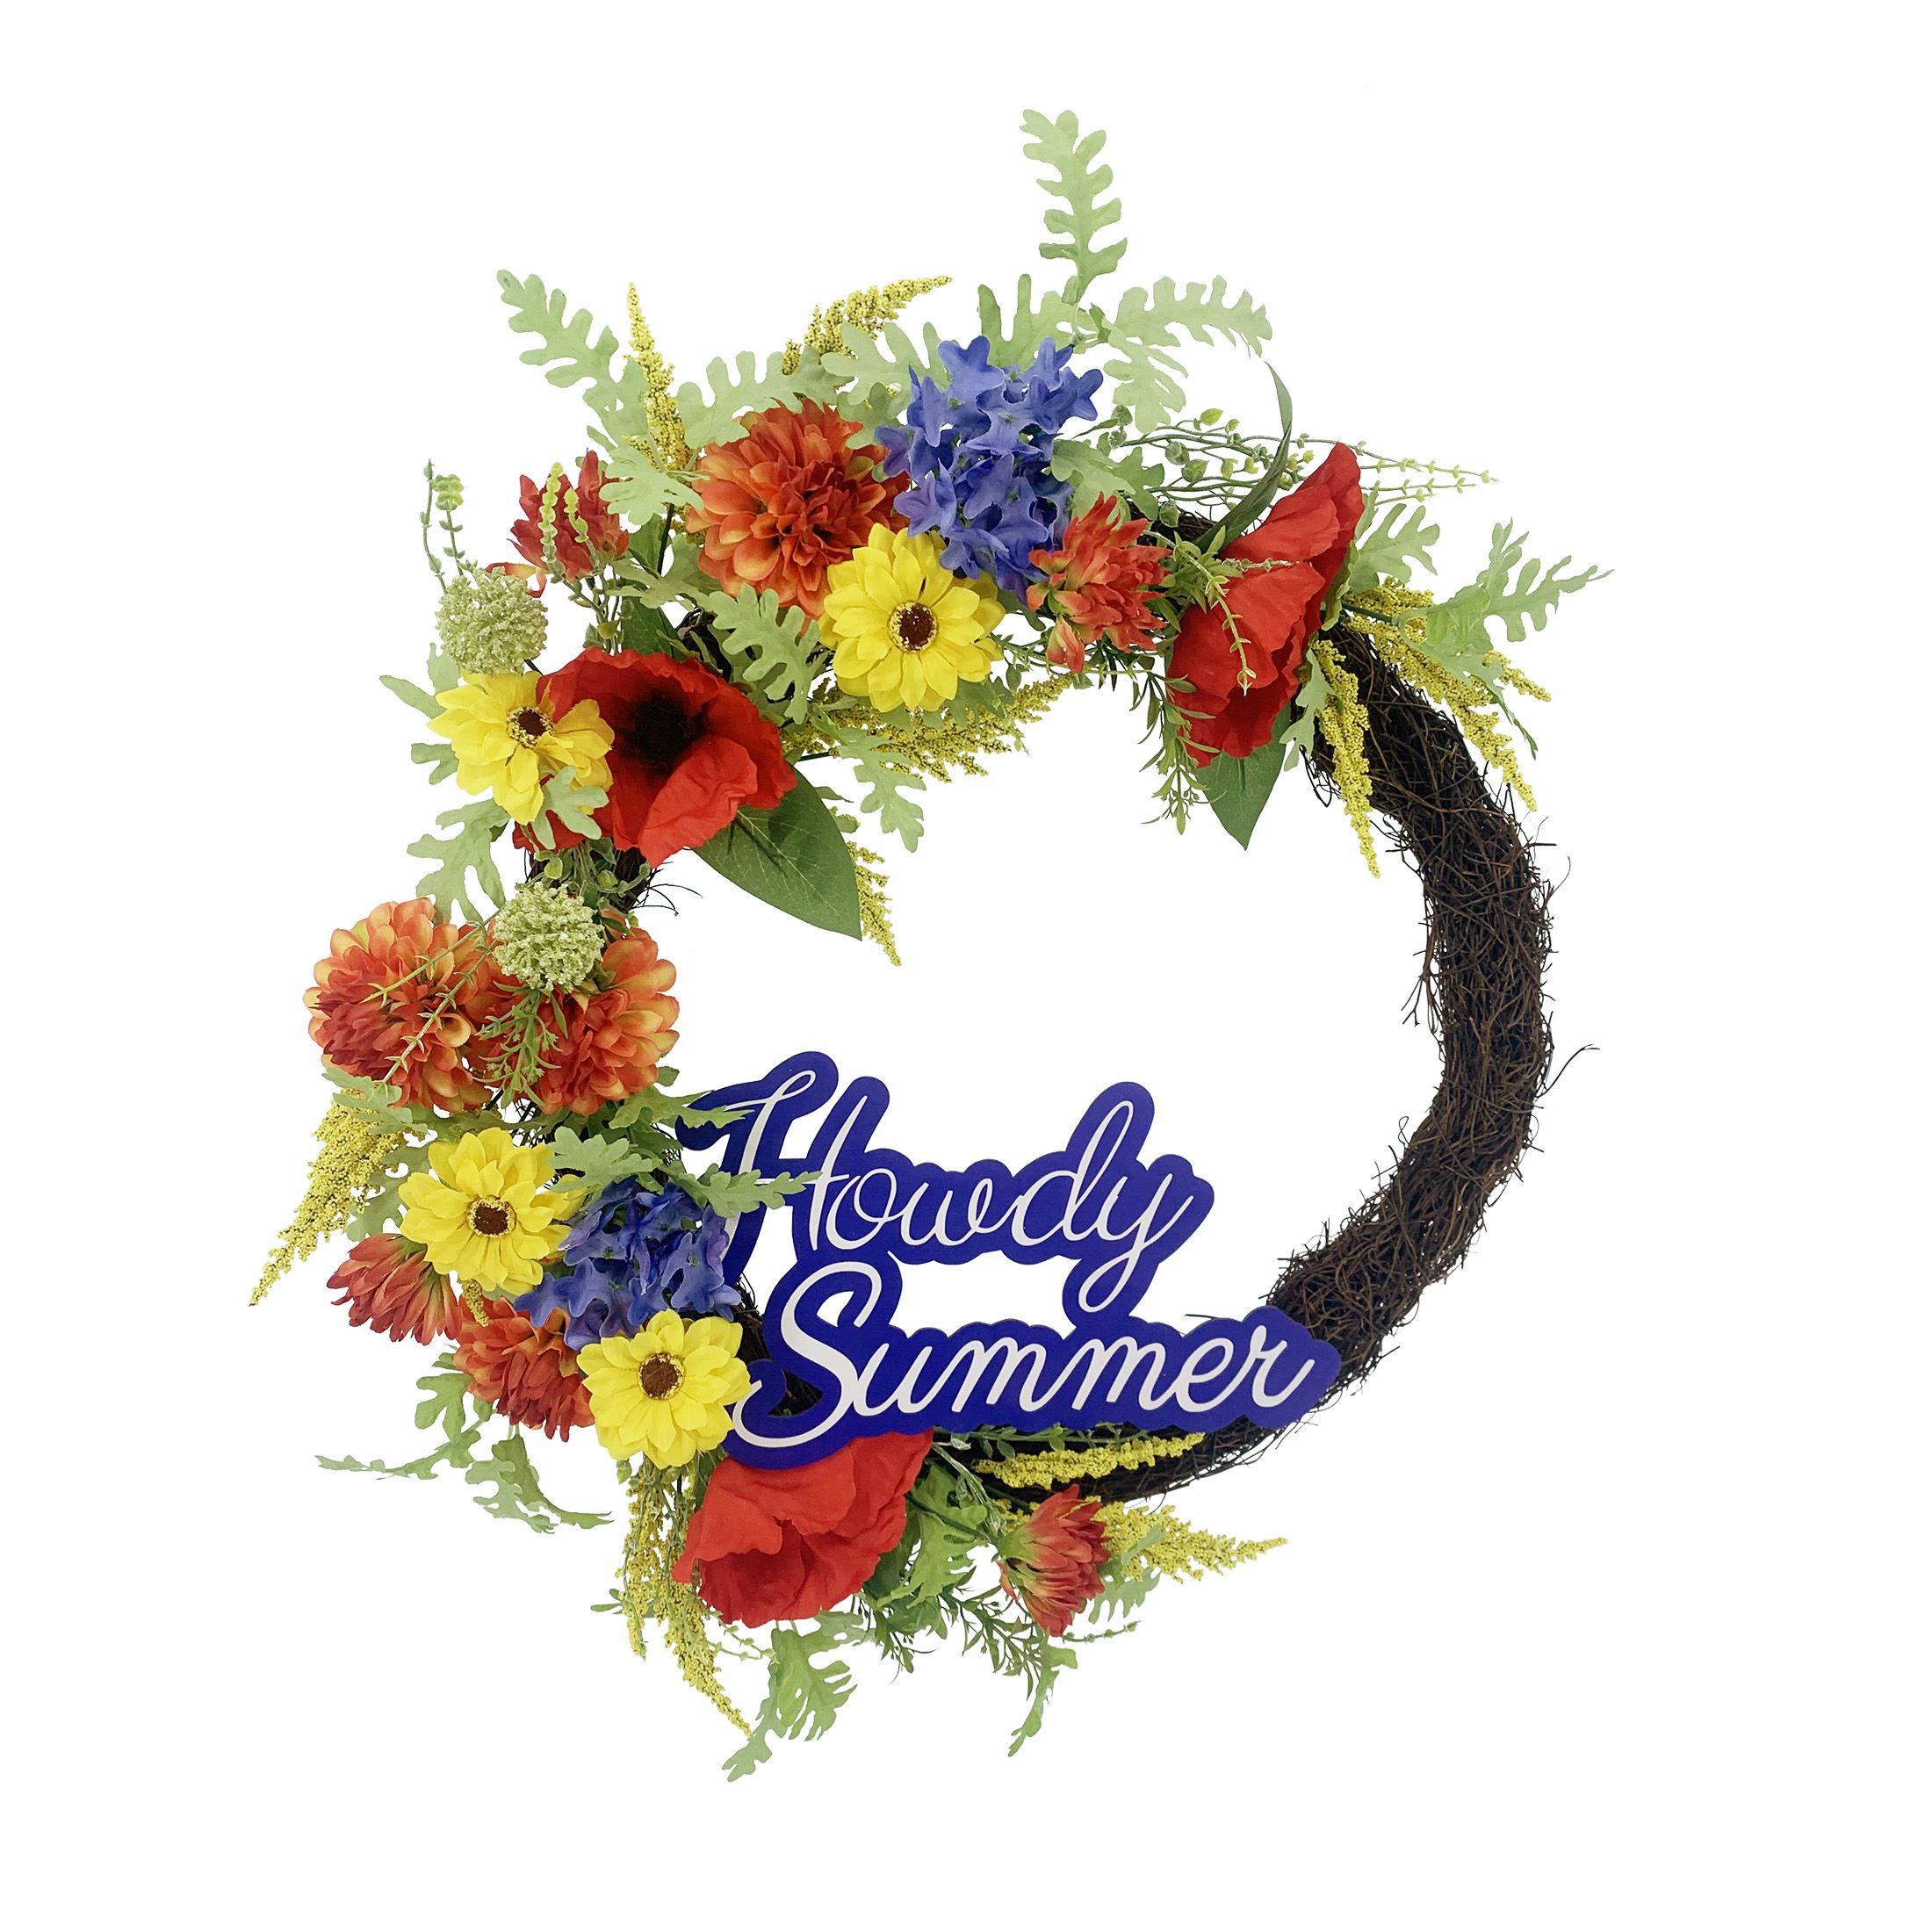 The Pioneer Woman Howdy Summer Wreath